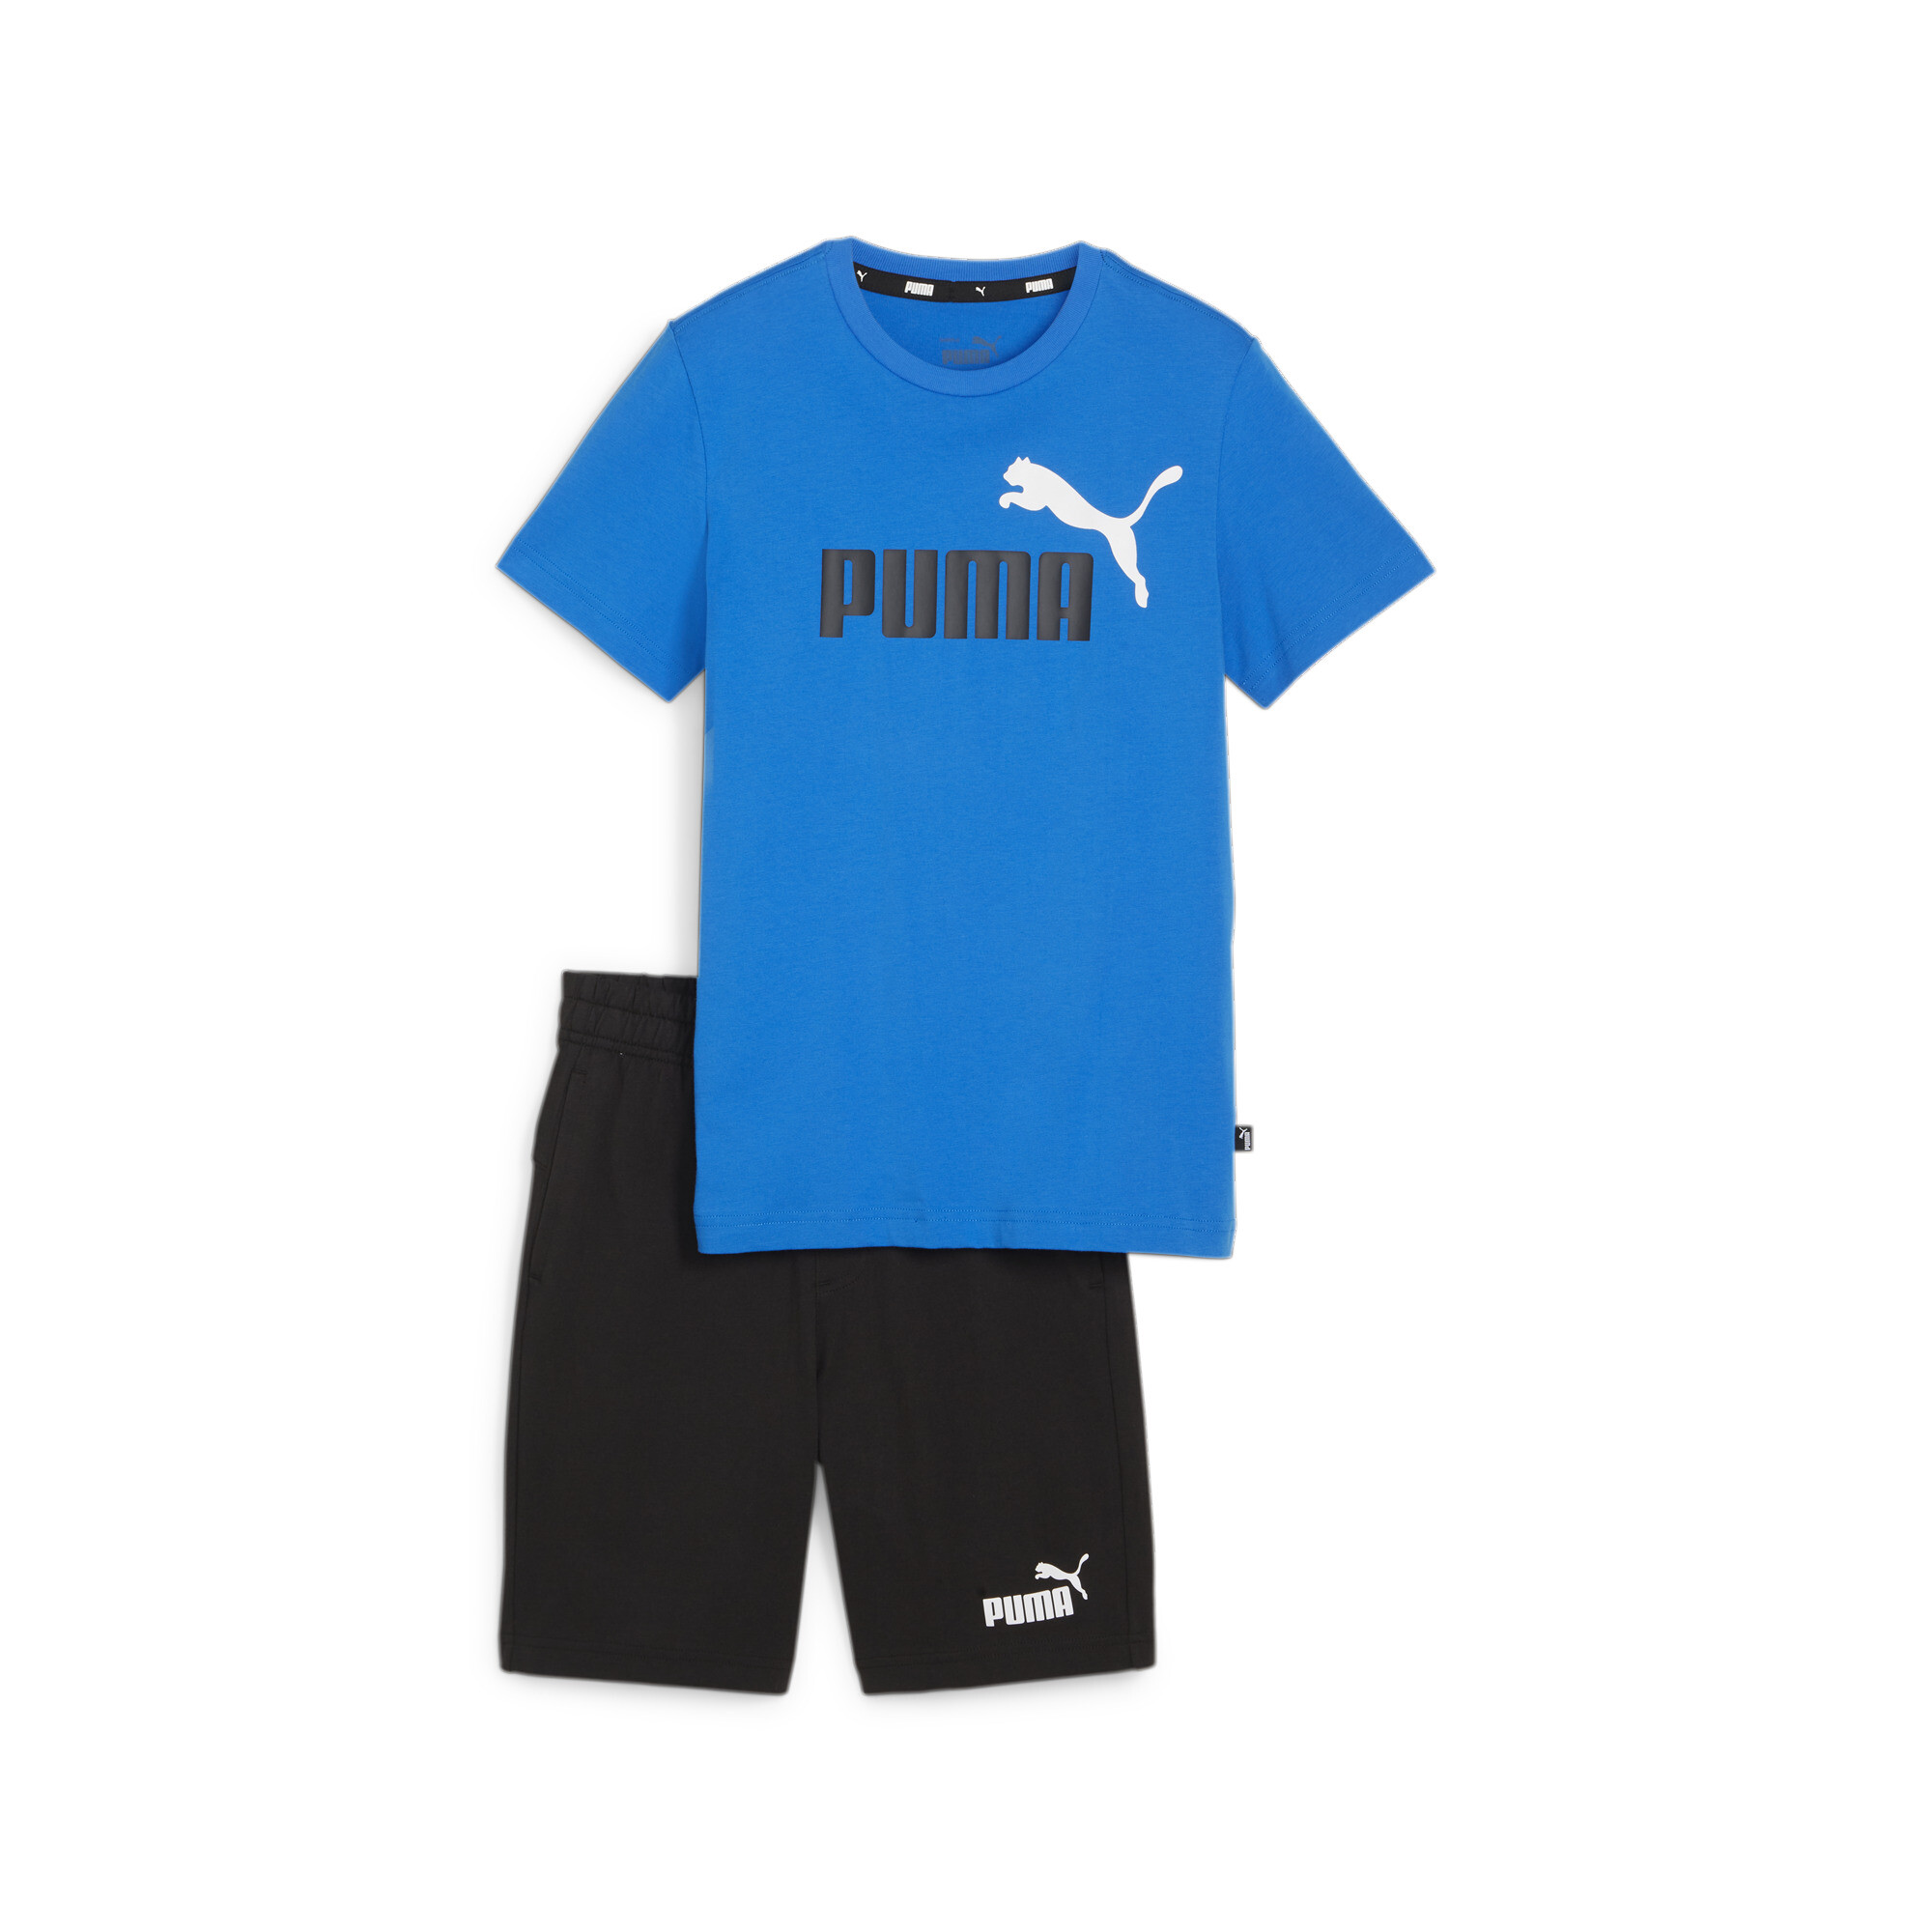 Men's Puma Jersey Youth Shorts Set, Blue, Size 13-14Y, Clothing